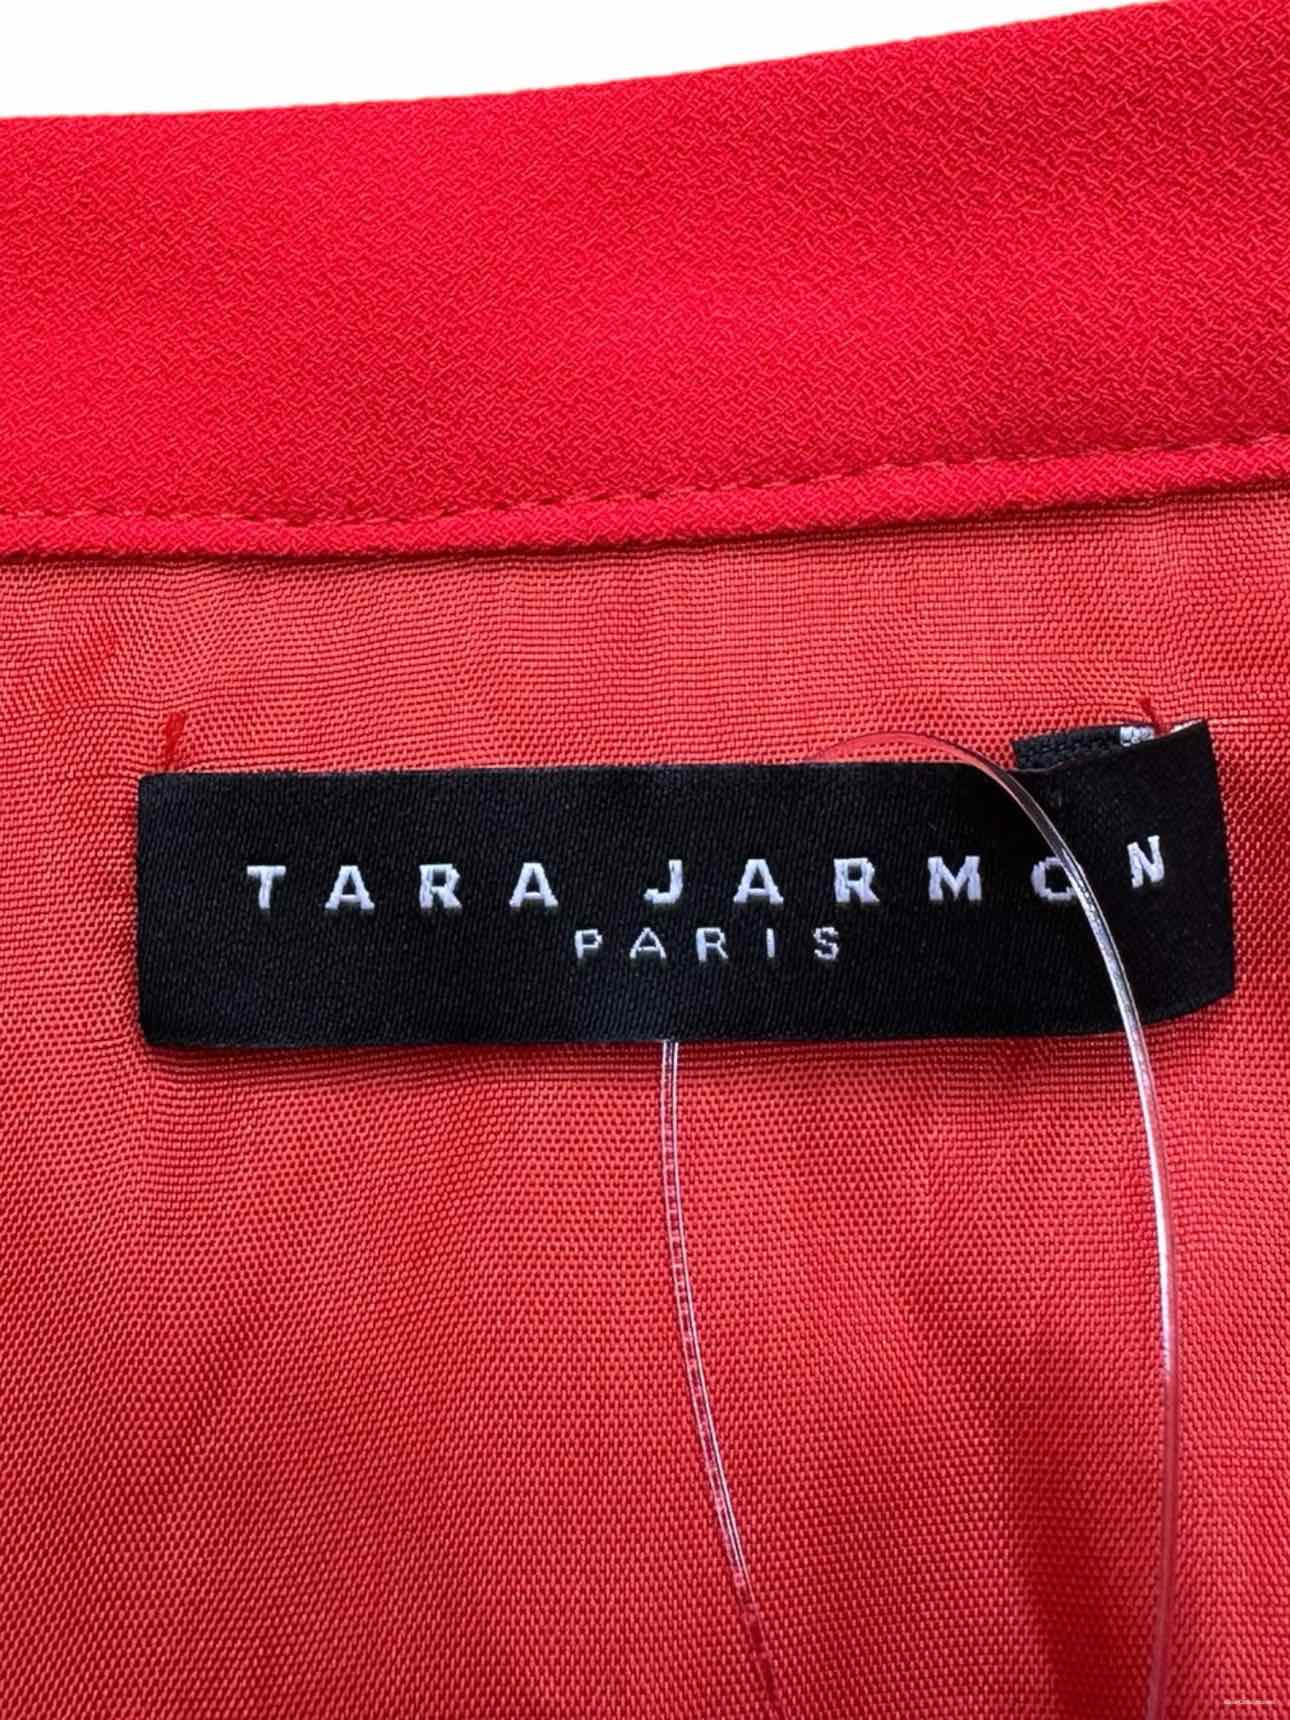 Tara Jarmon Red Halter Mini Cocktail Dress Size XS